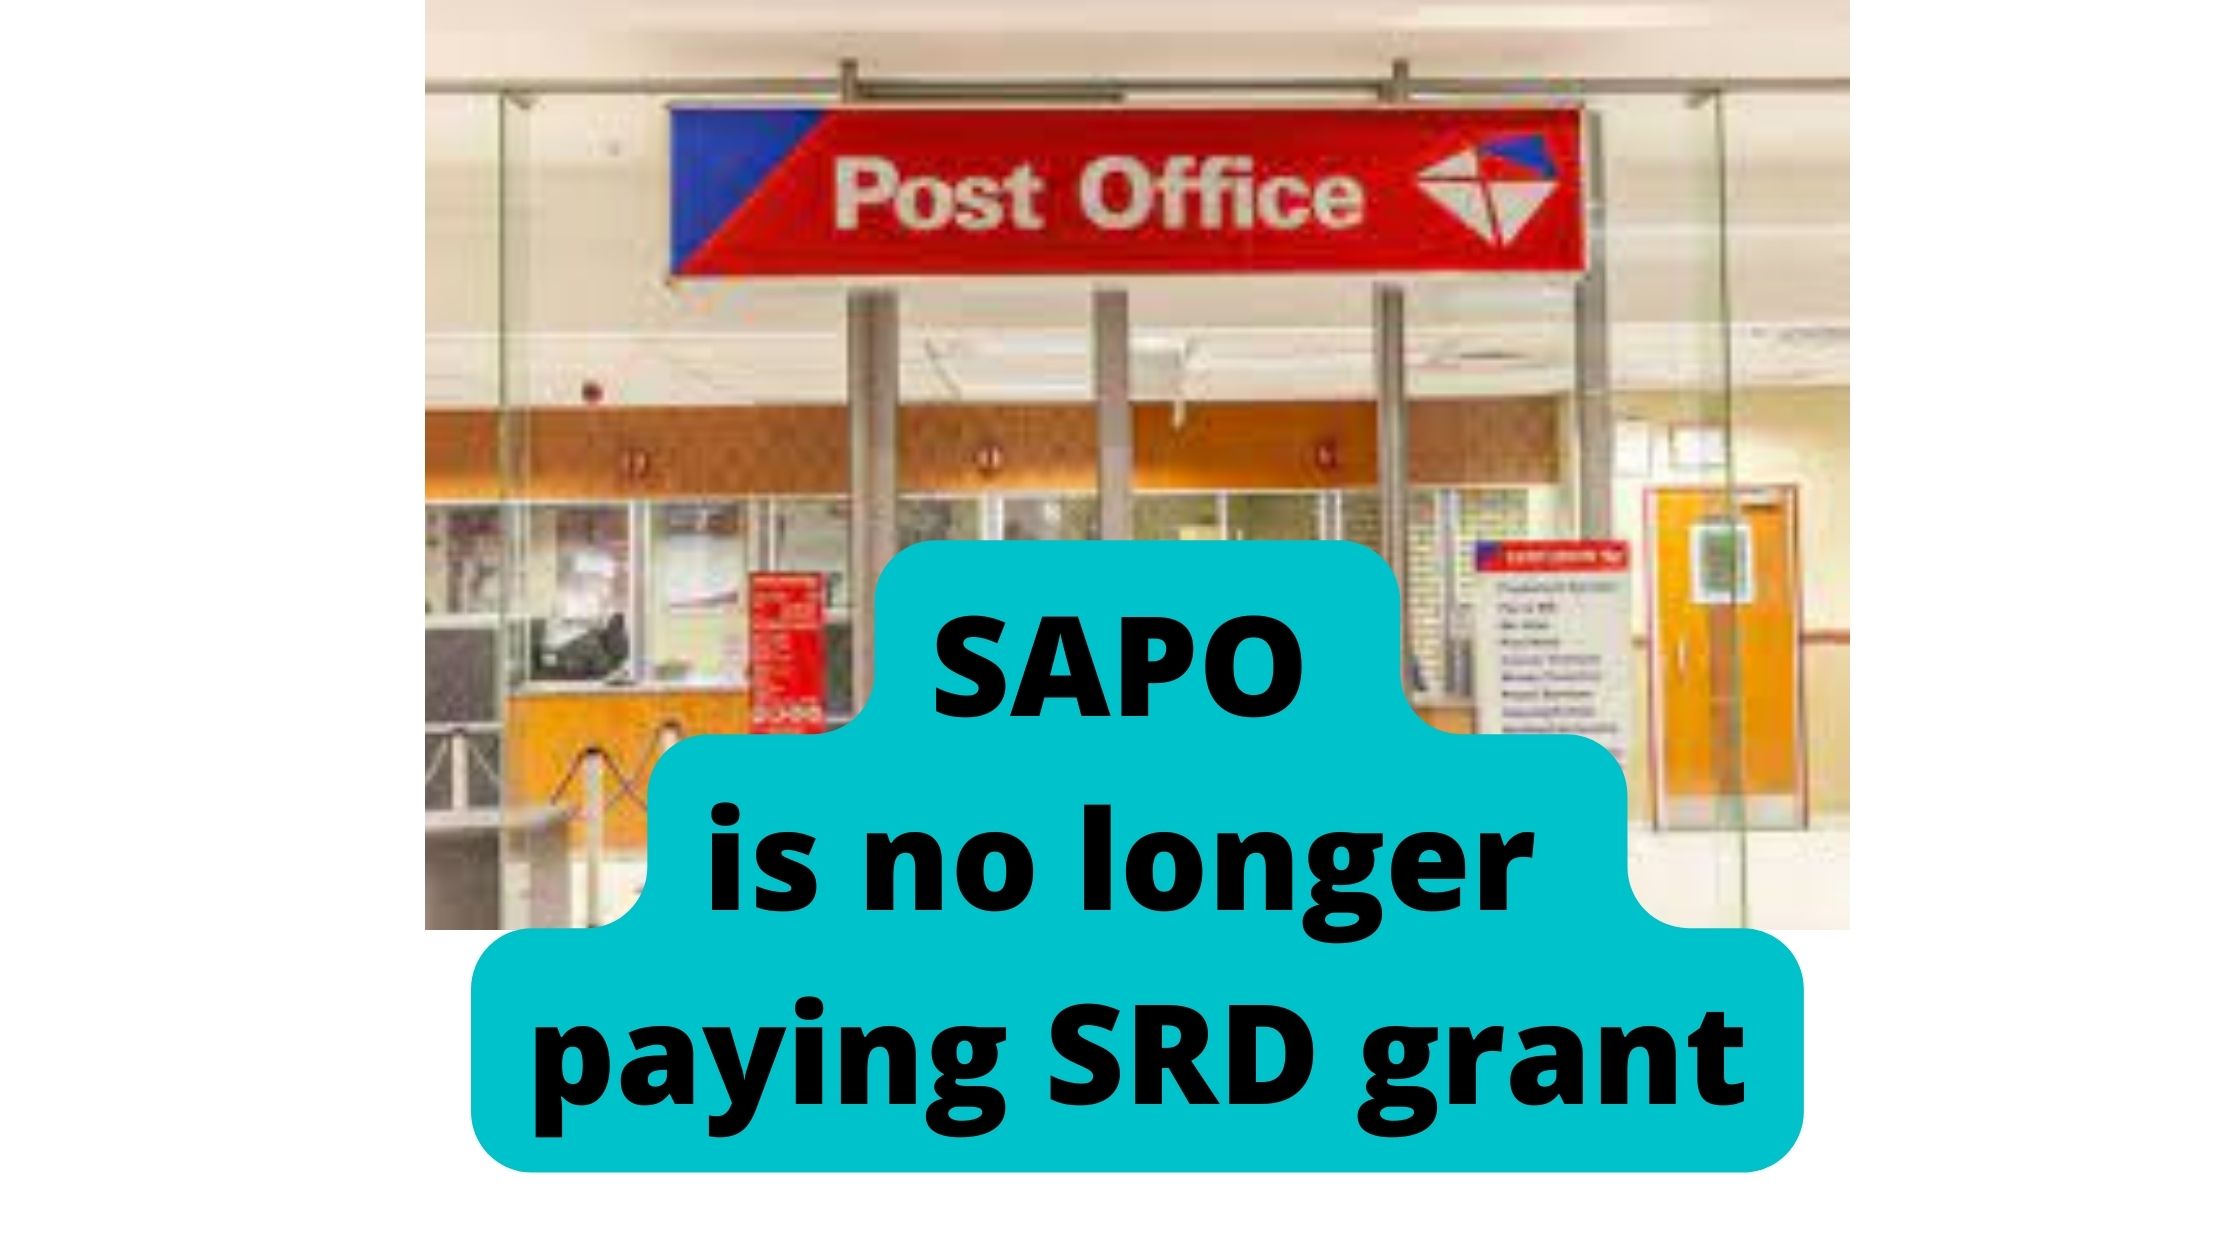 SAPO is no longer paying SRD grant